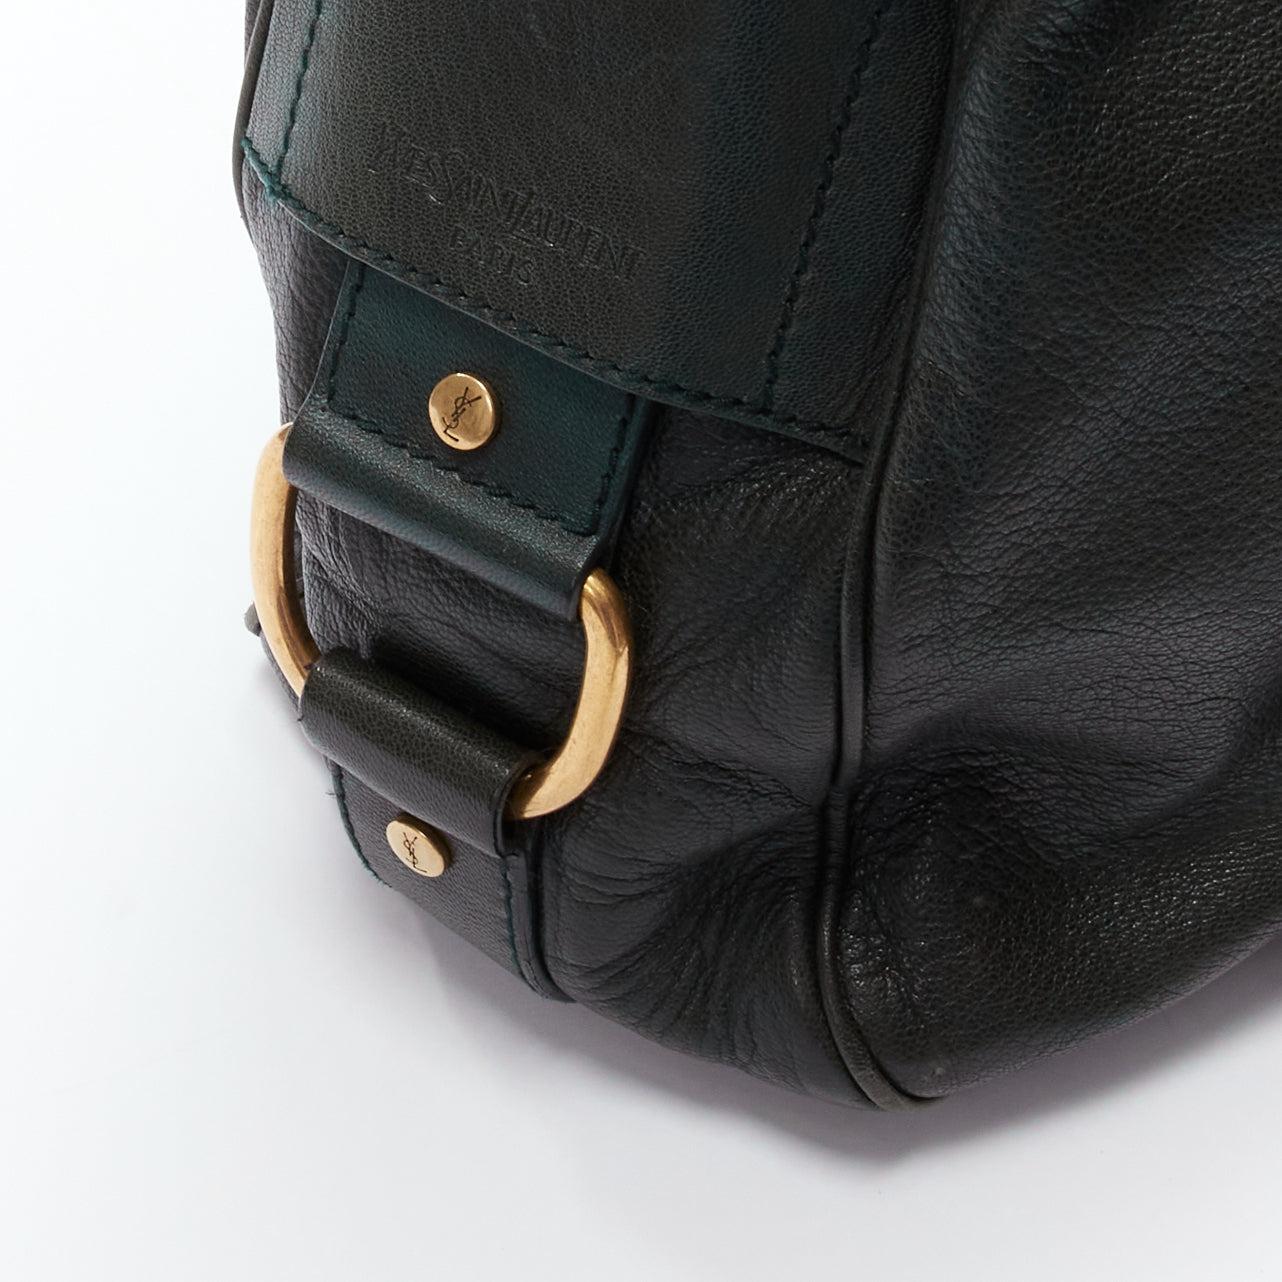 YVES SAINT LAURENT Rive Gauche Muse dark green leather GHW satchel bag 5